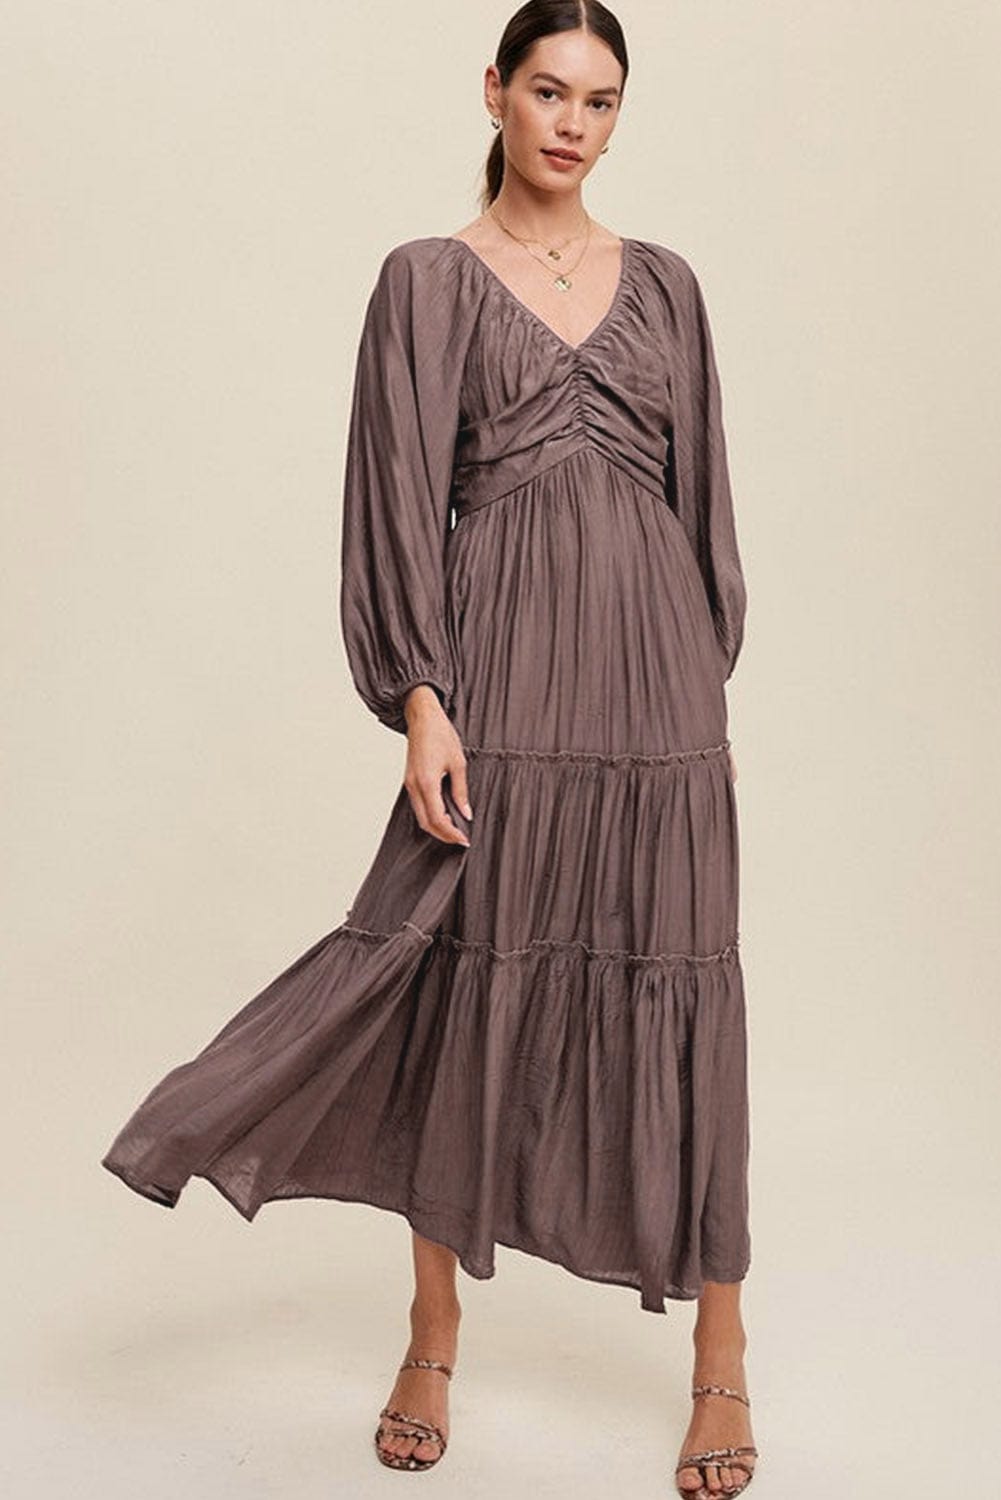 Shoppe EZR Dresses Brown V Neck Bowknot Cutout Frill Tiered Maxi Dress